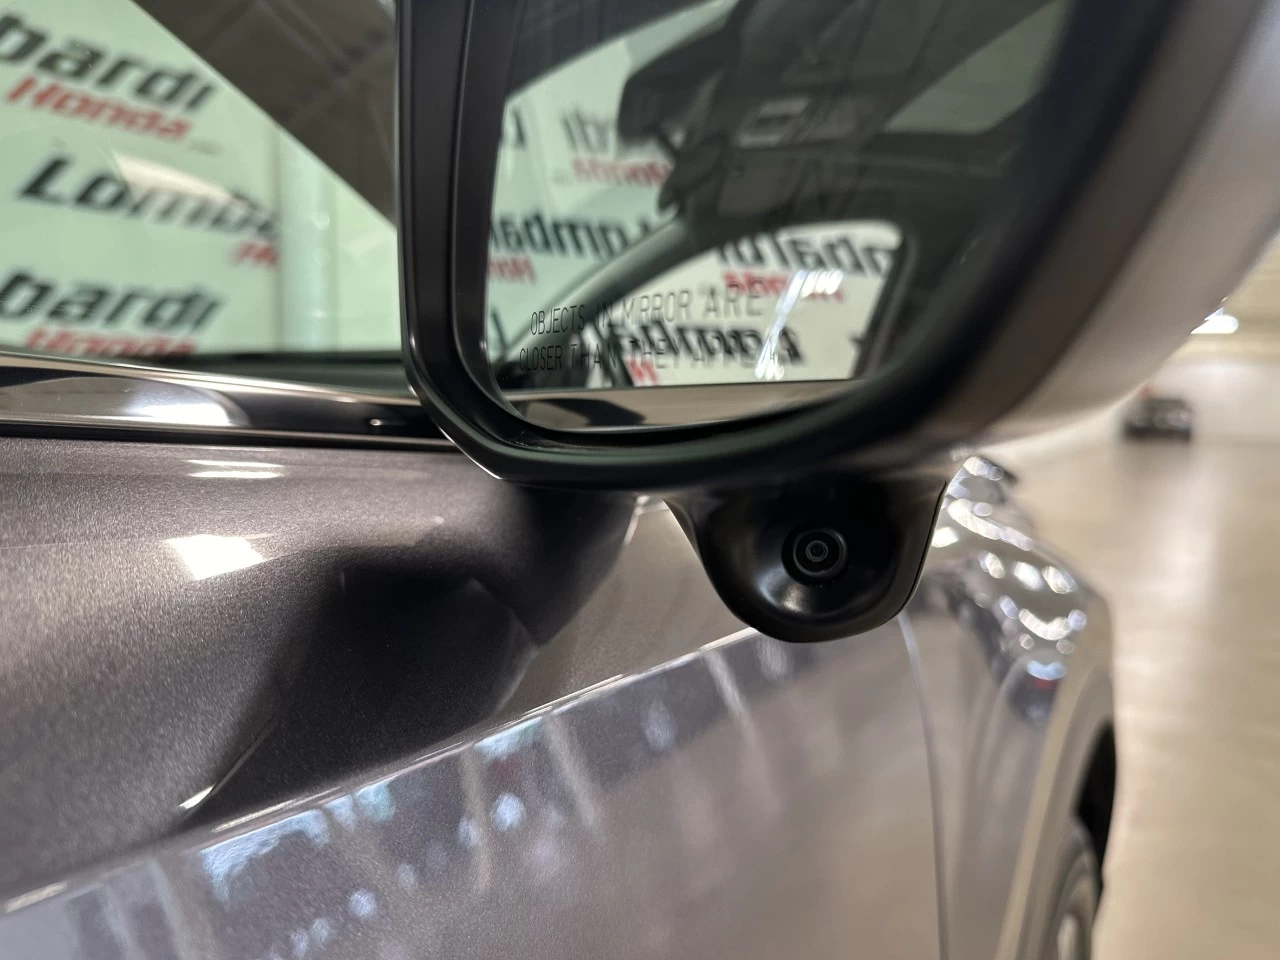 2019 Honda CR-V
                                                    EX Main Image